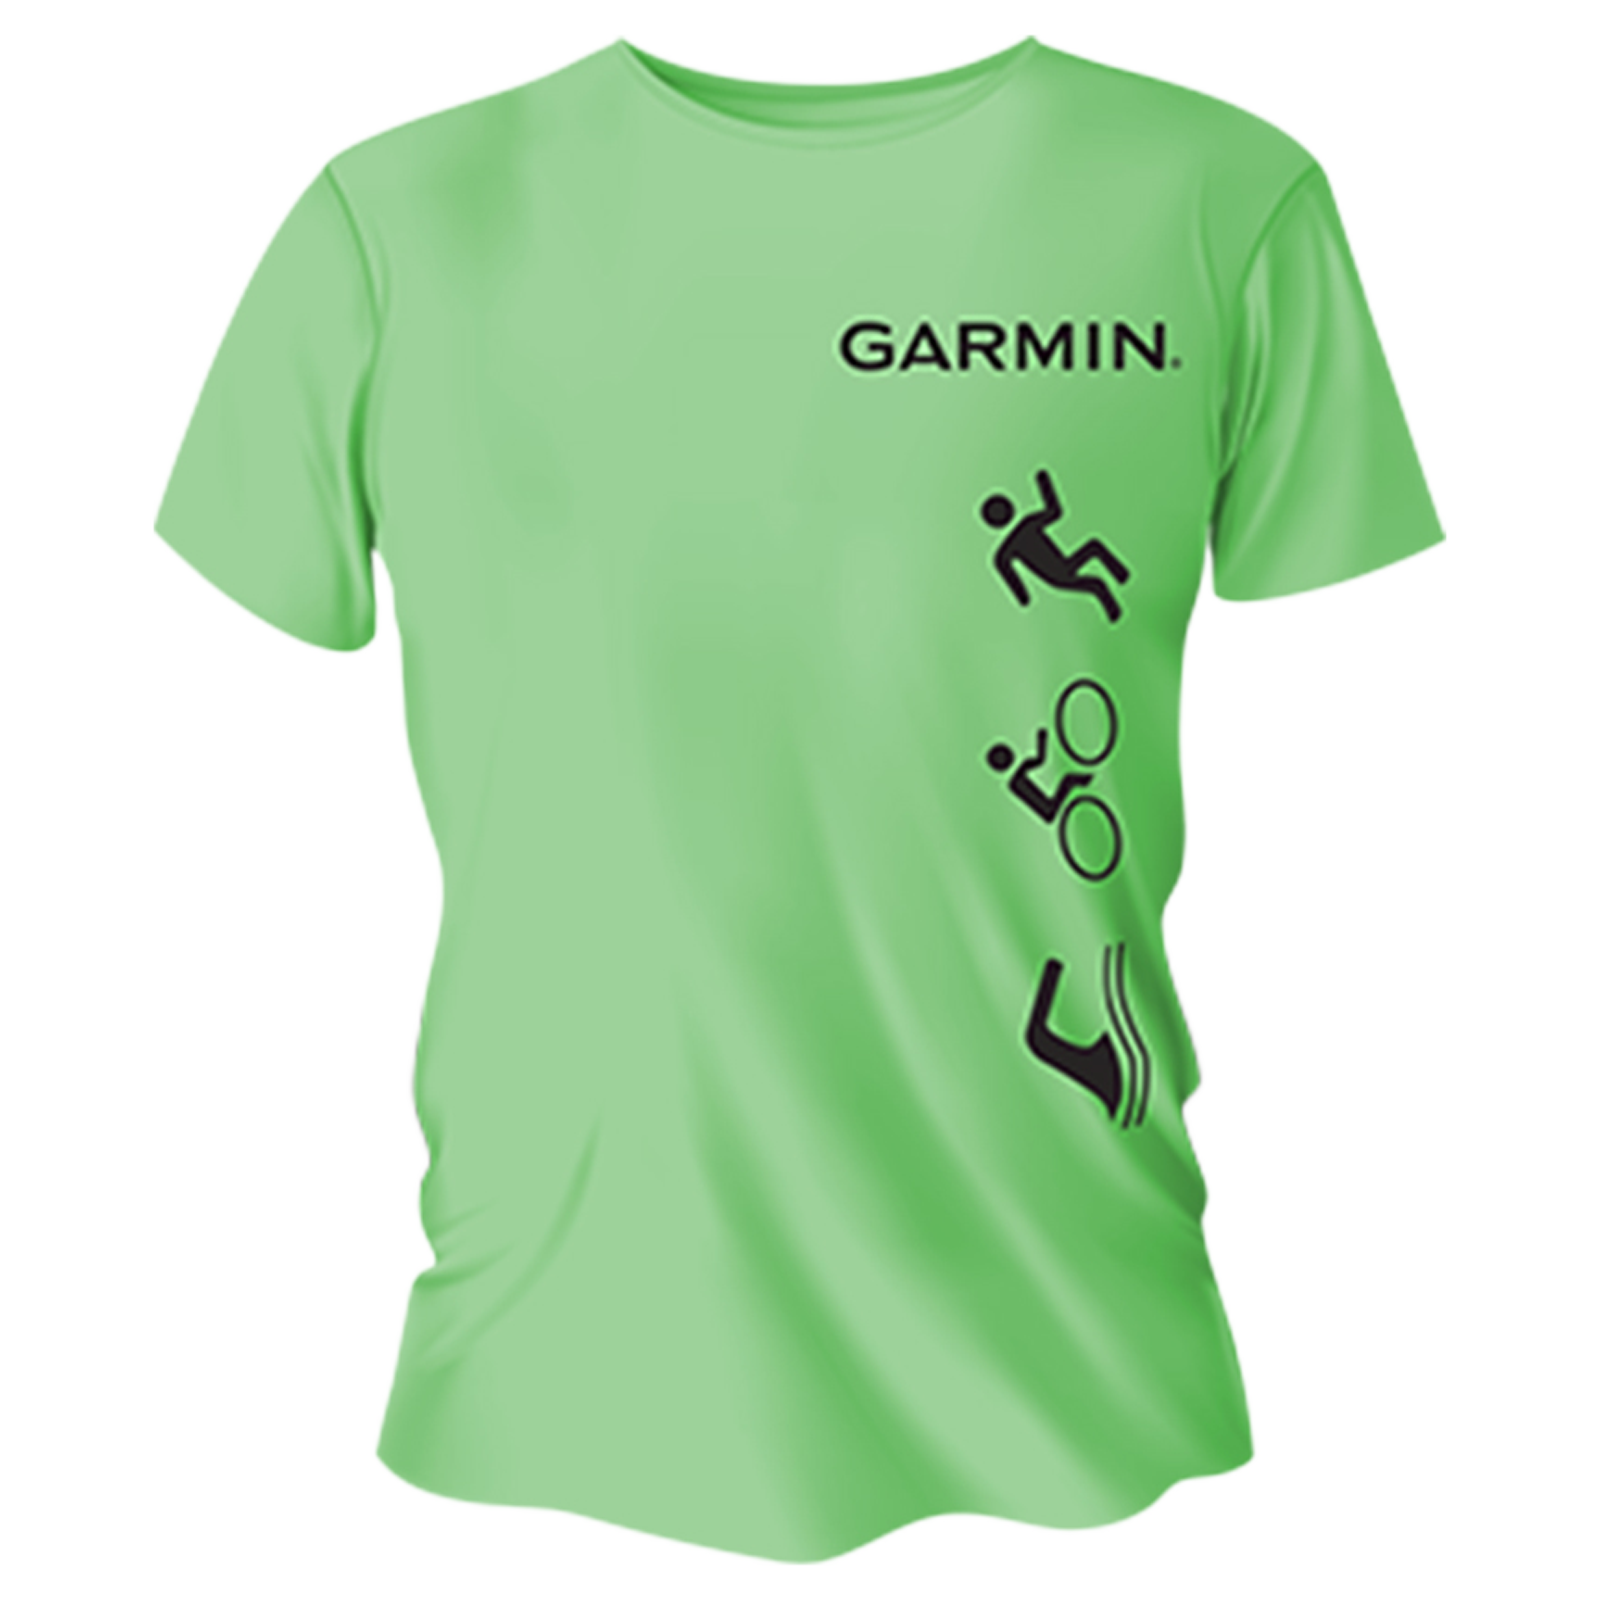 Garmin Dry fit T-Shirt (TEE, Neon Green)_1